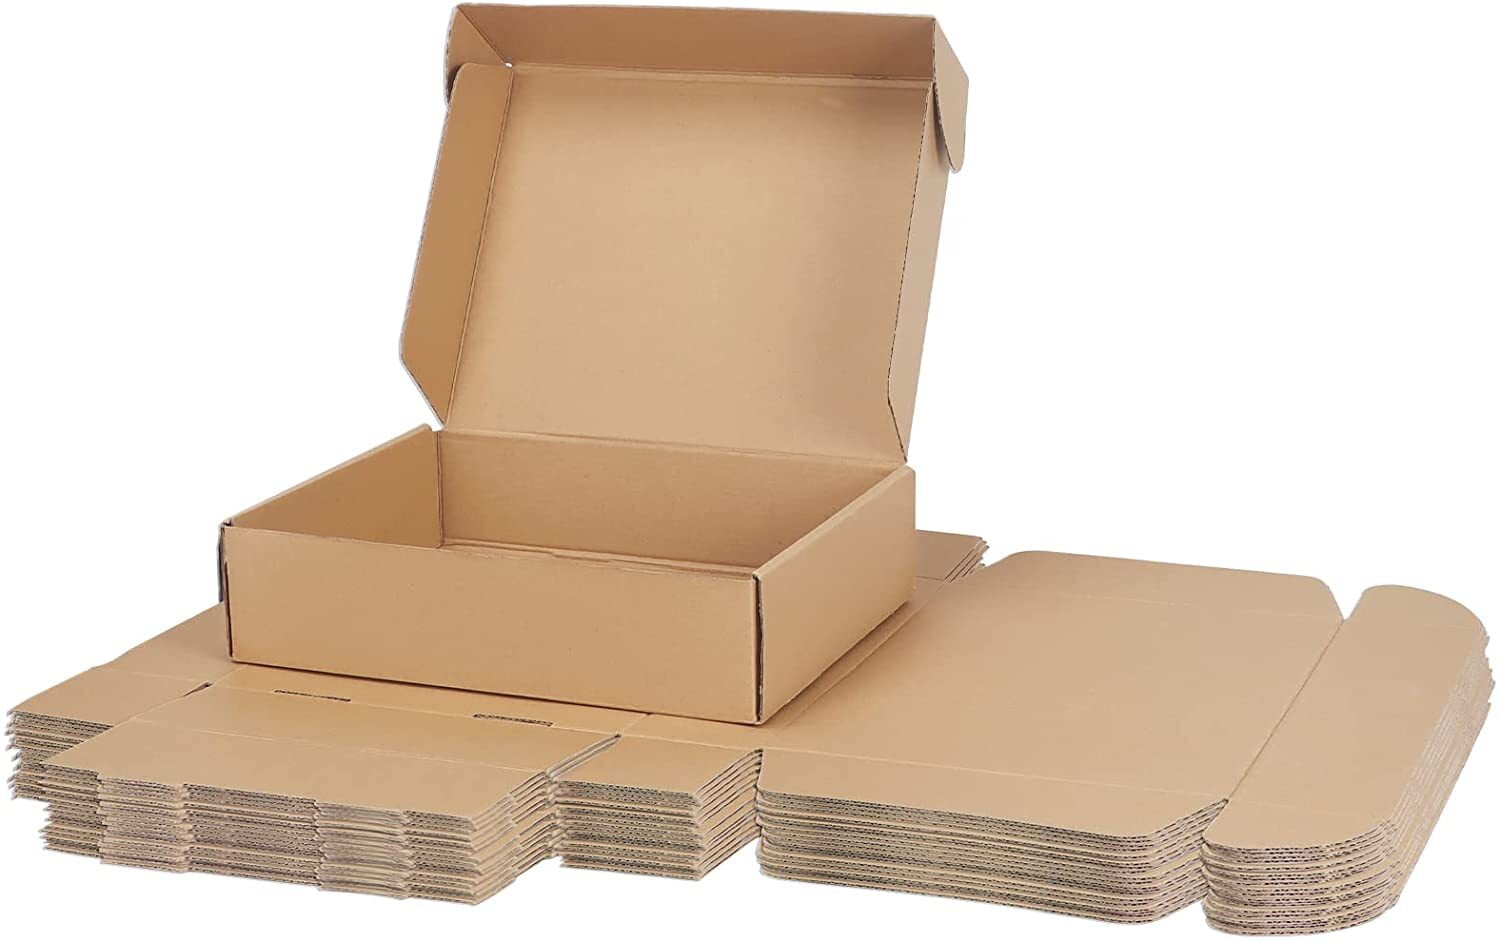 30 10x6x4 "EcoSwift" Brand Cardboard Box Packing Mailing Shipping Corrugated